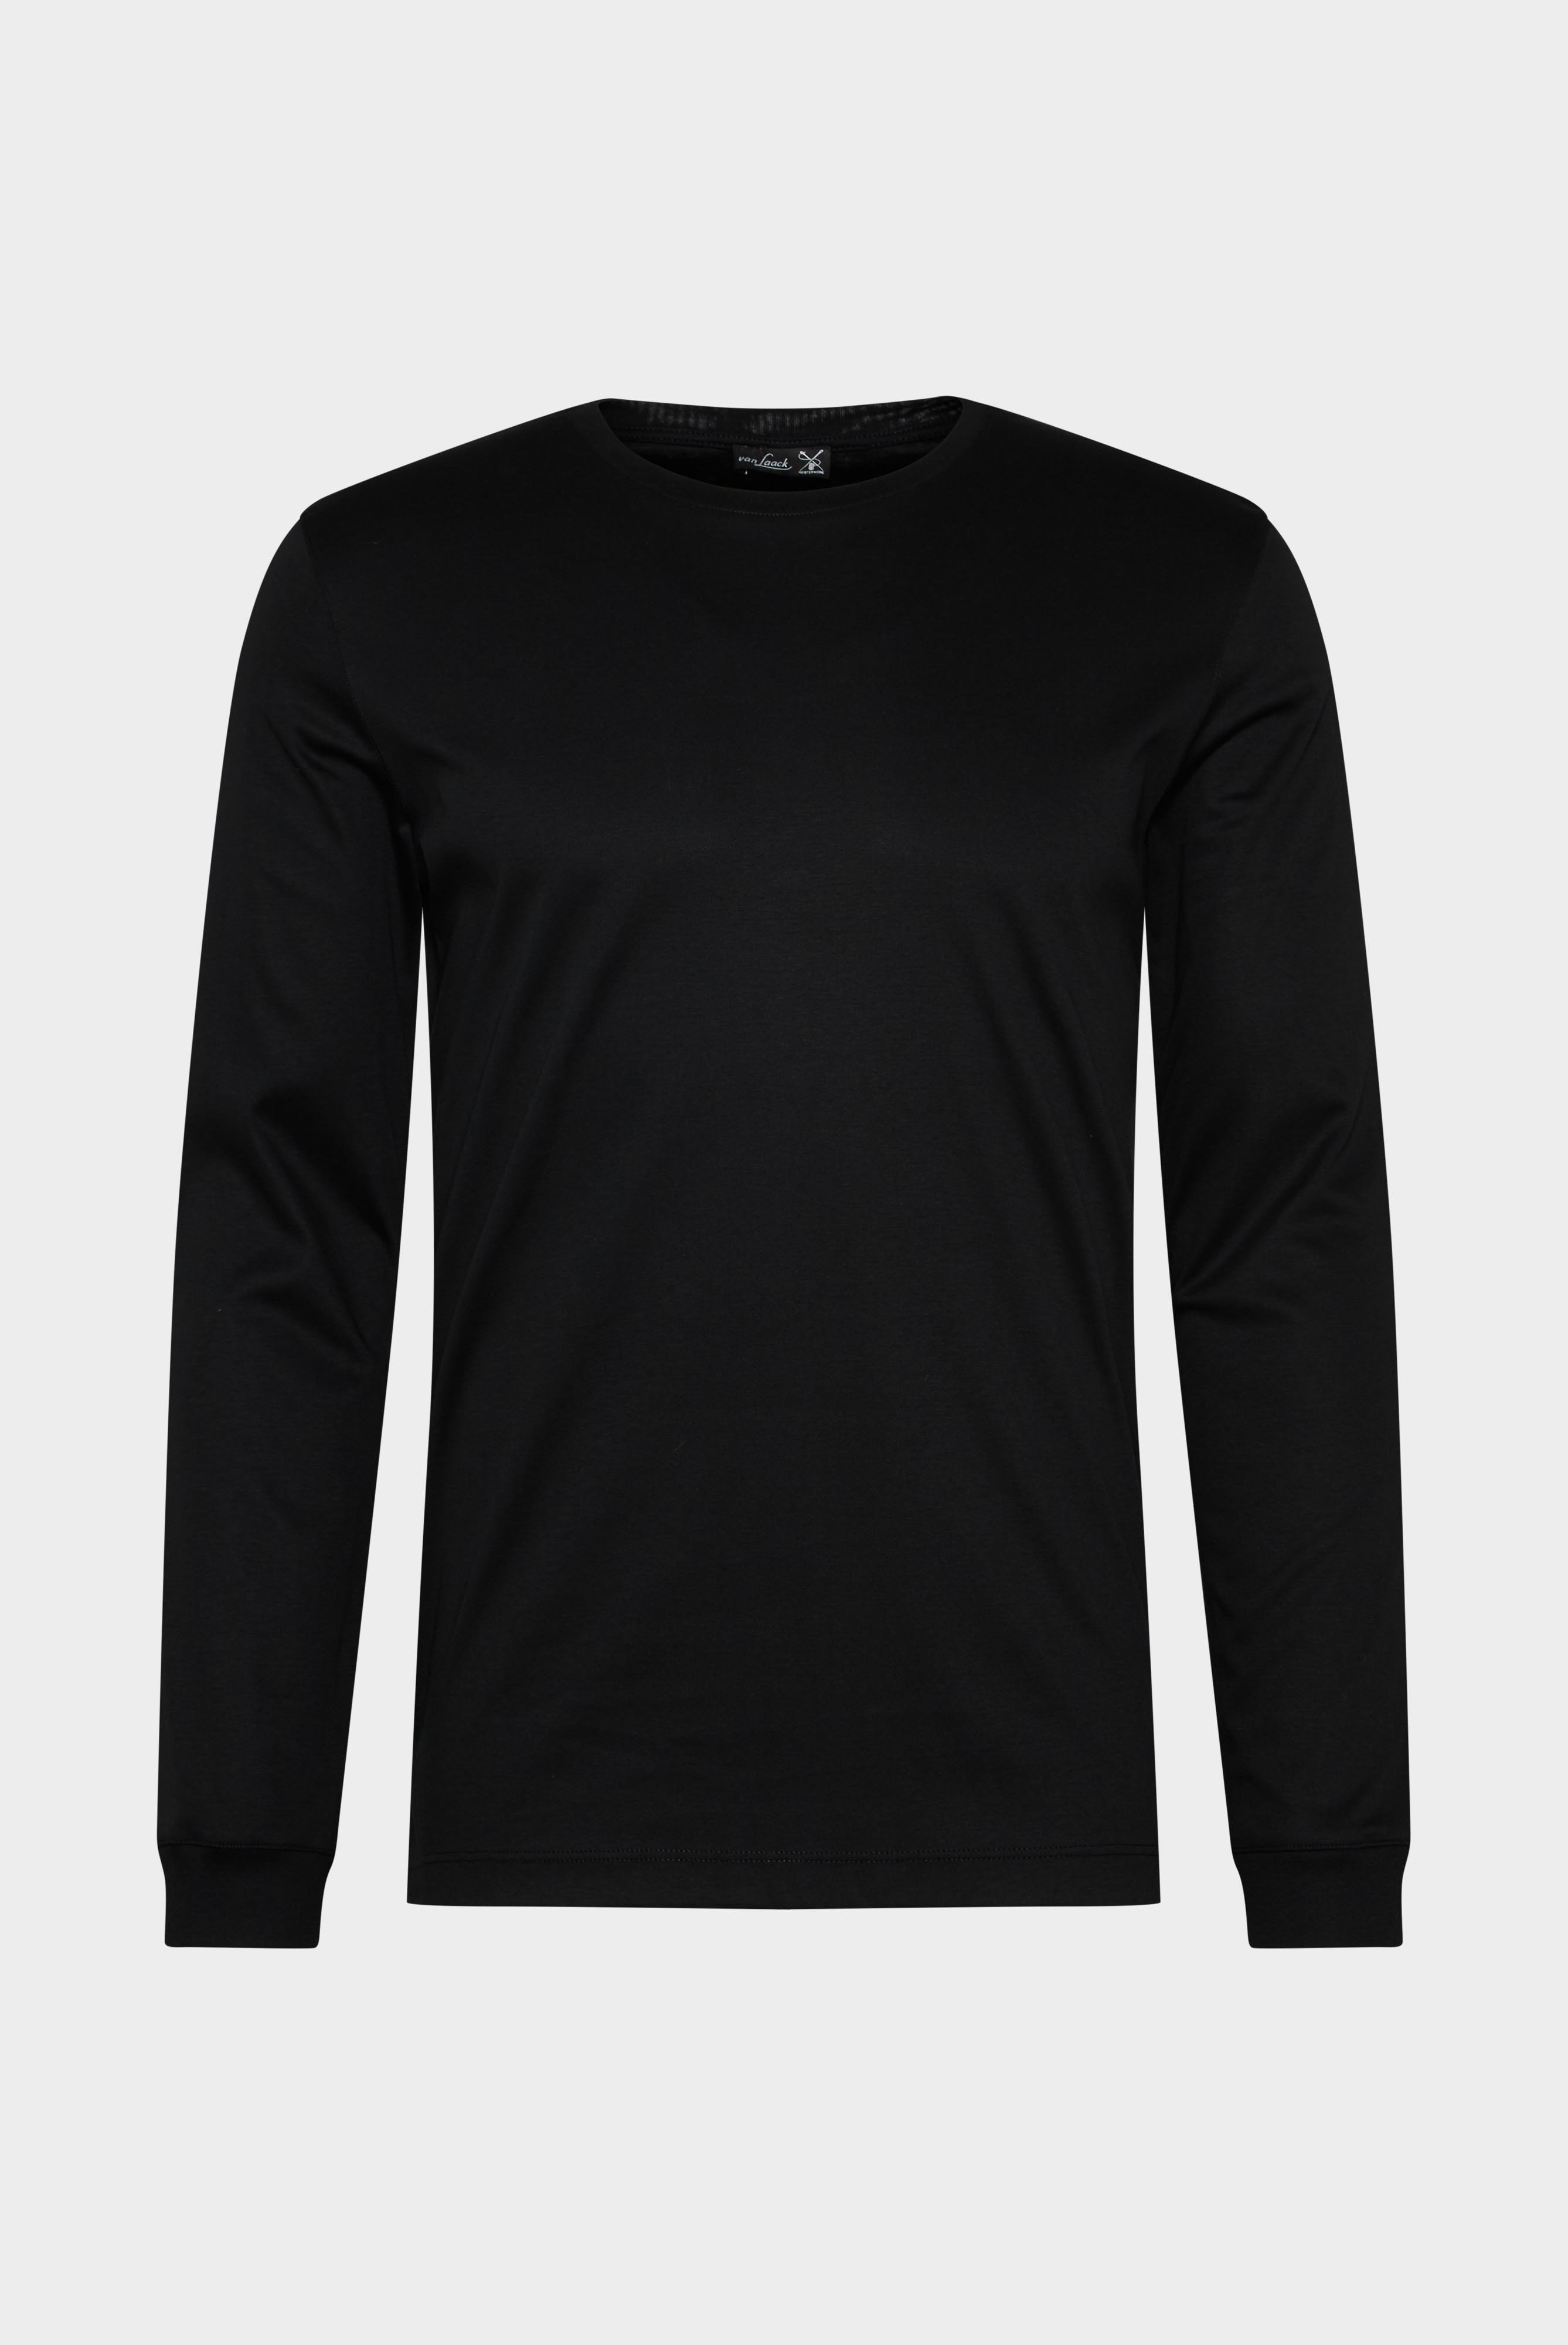 T-Shirts+Langarm Jersey T-Shirt mit Rundhals Slim Fit+20.1718.UX.180031.099.S